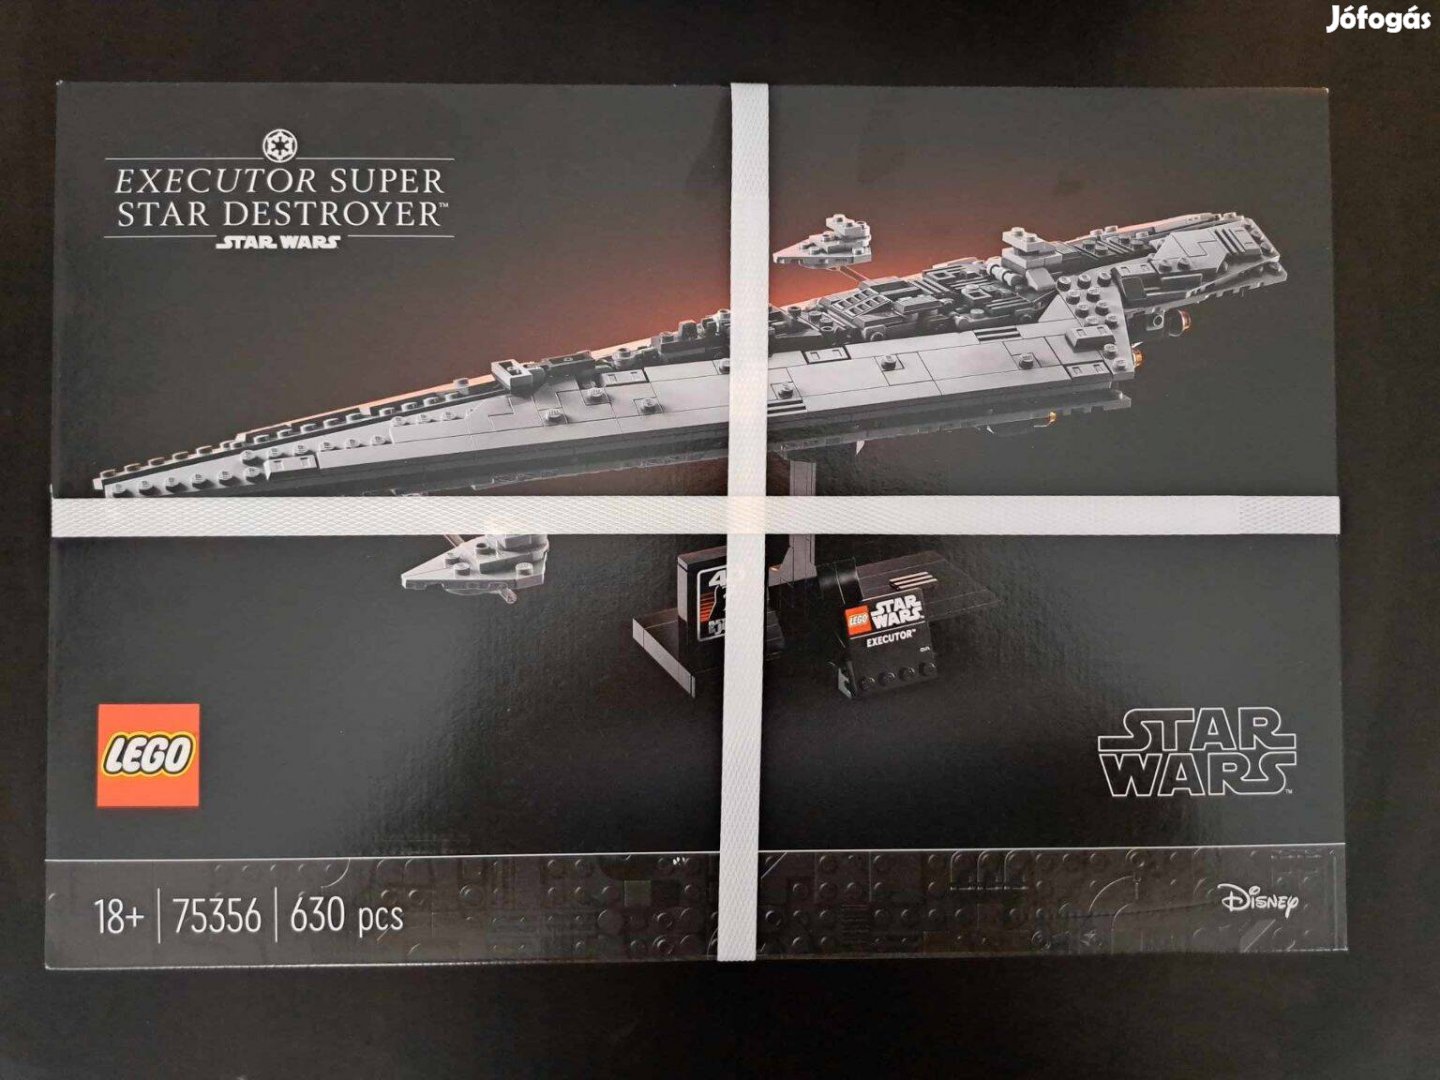 LEGO Star Wars 75356 Executor Super Star Destroyer!